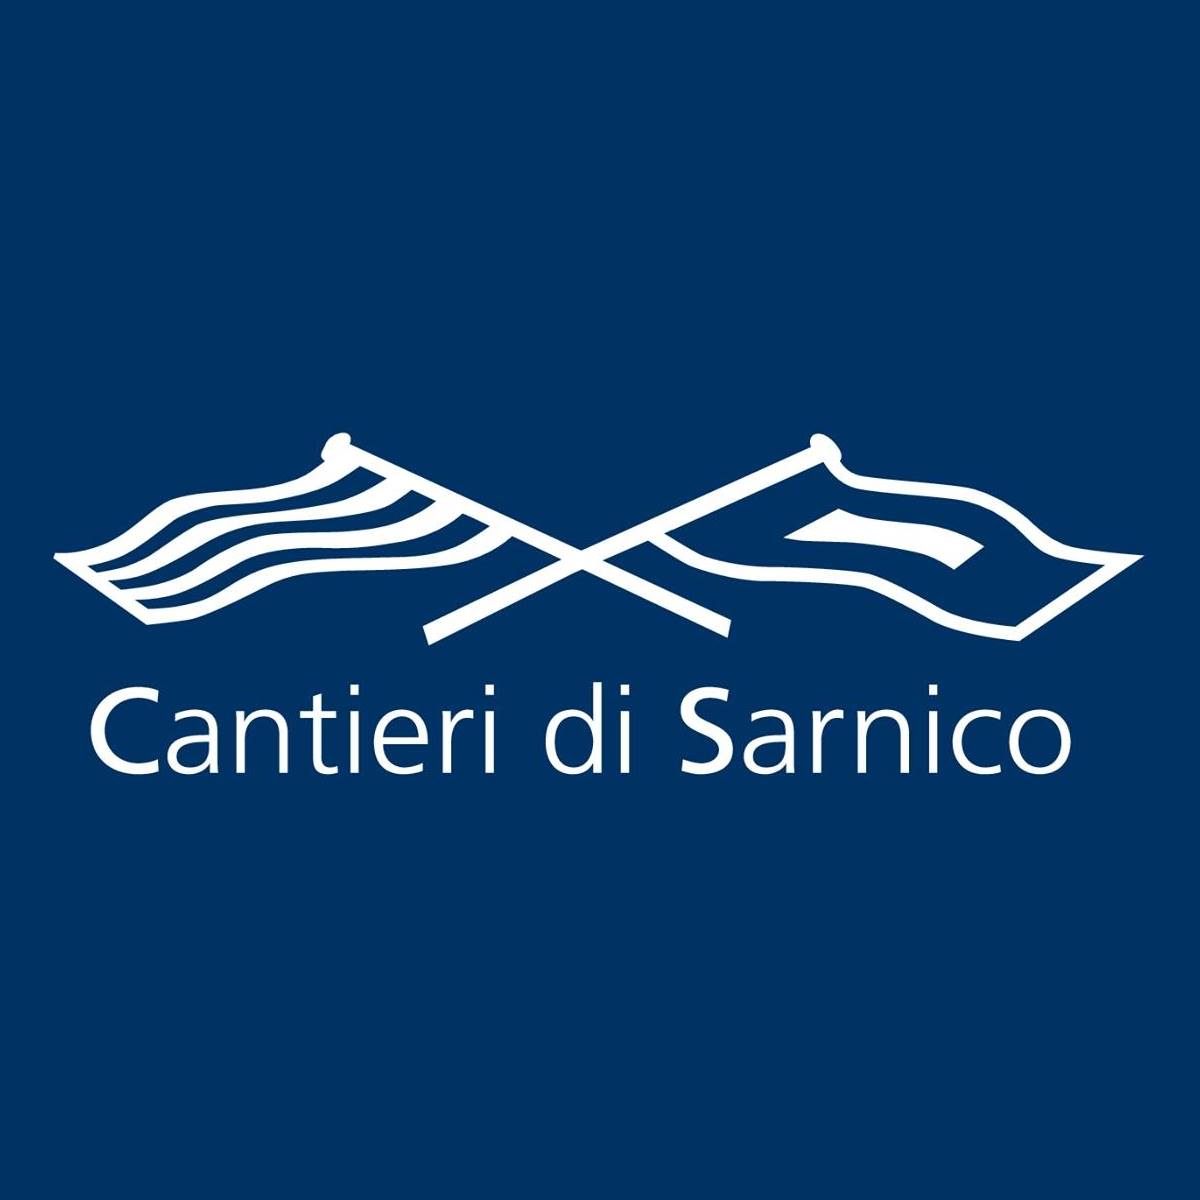 Cantieri di Sarnico logo